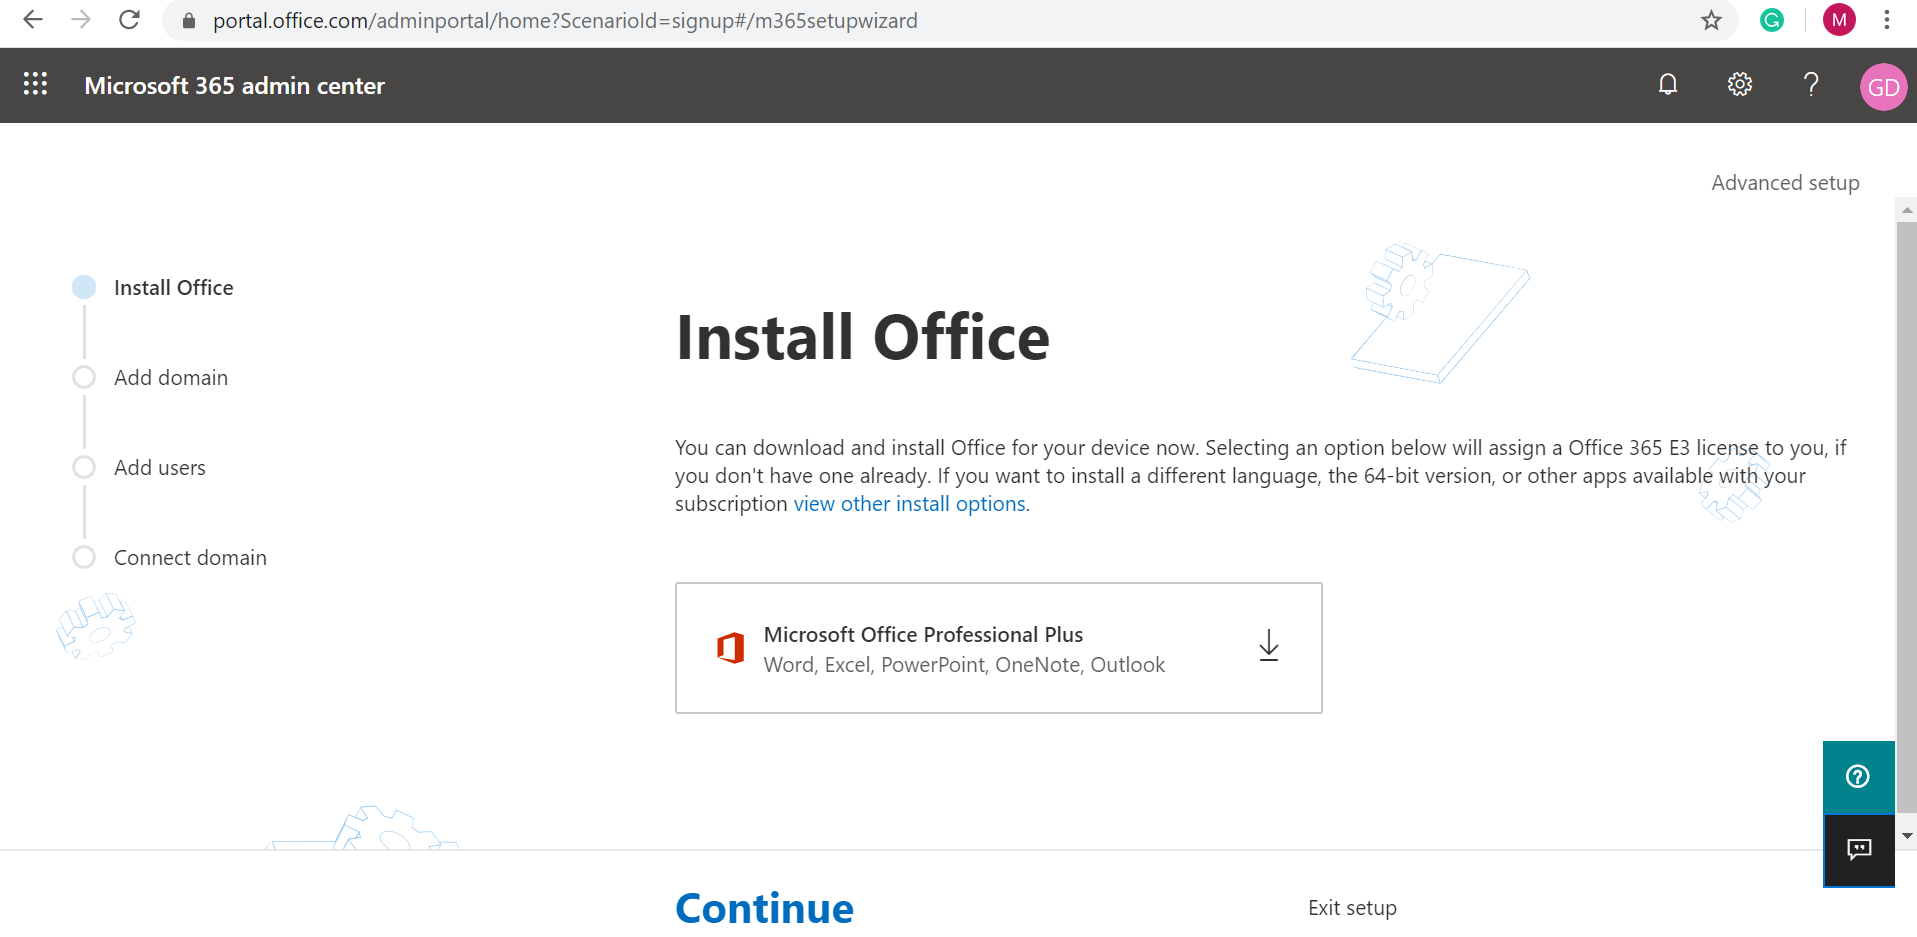 Office 365 E3 Trial - Microsoft 365 admin center home page